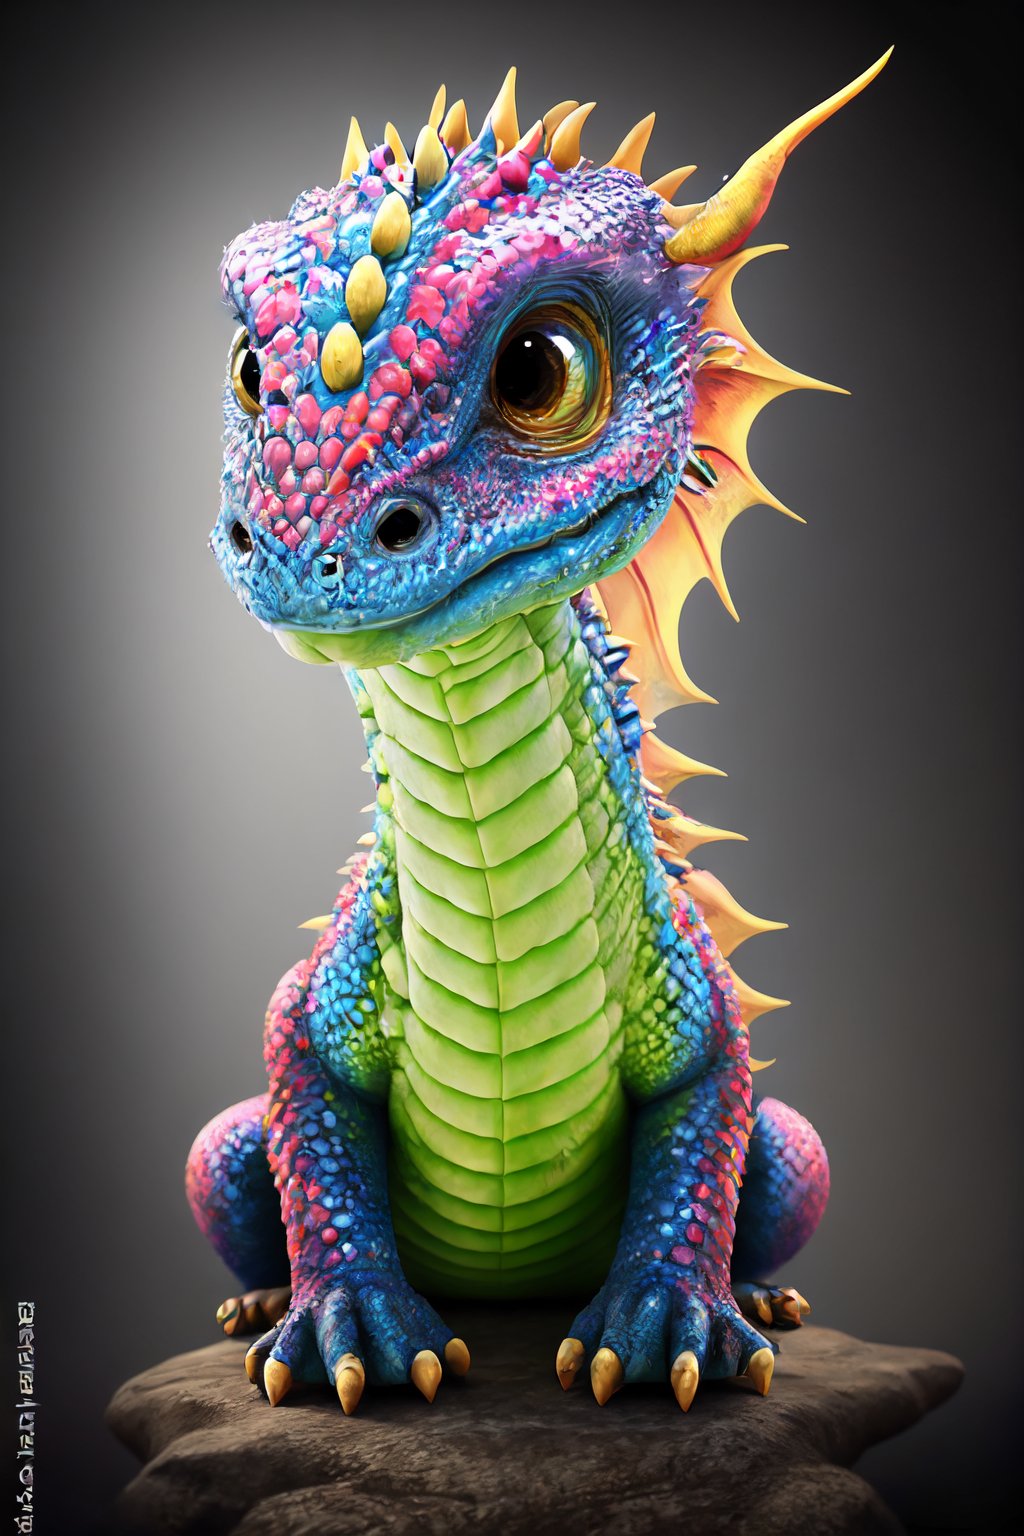 
dragon ,photorealistic